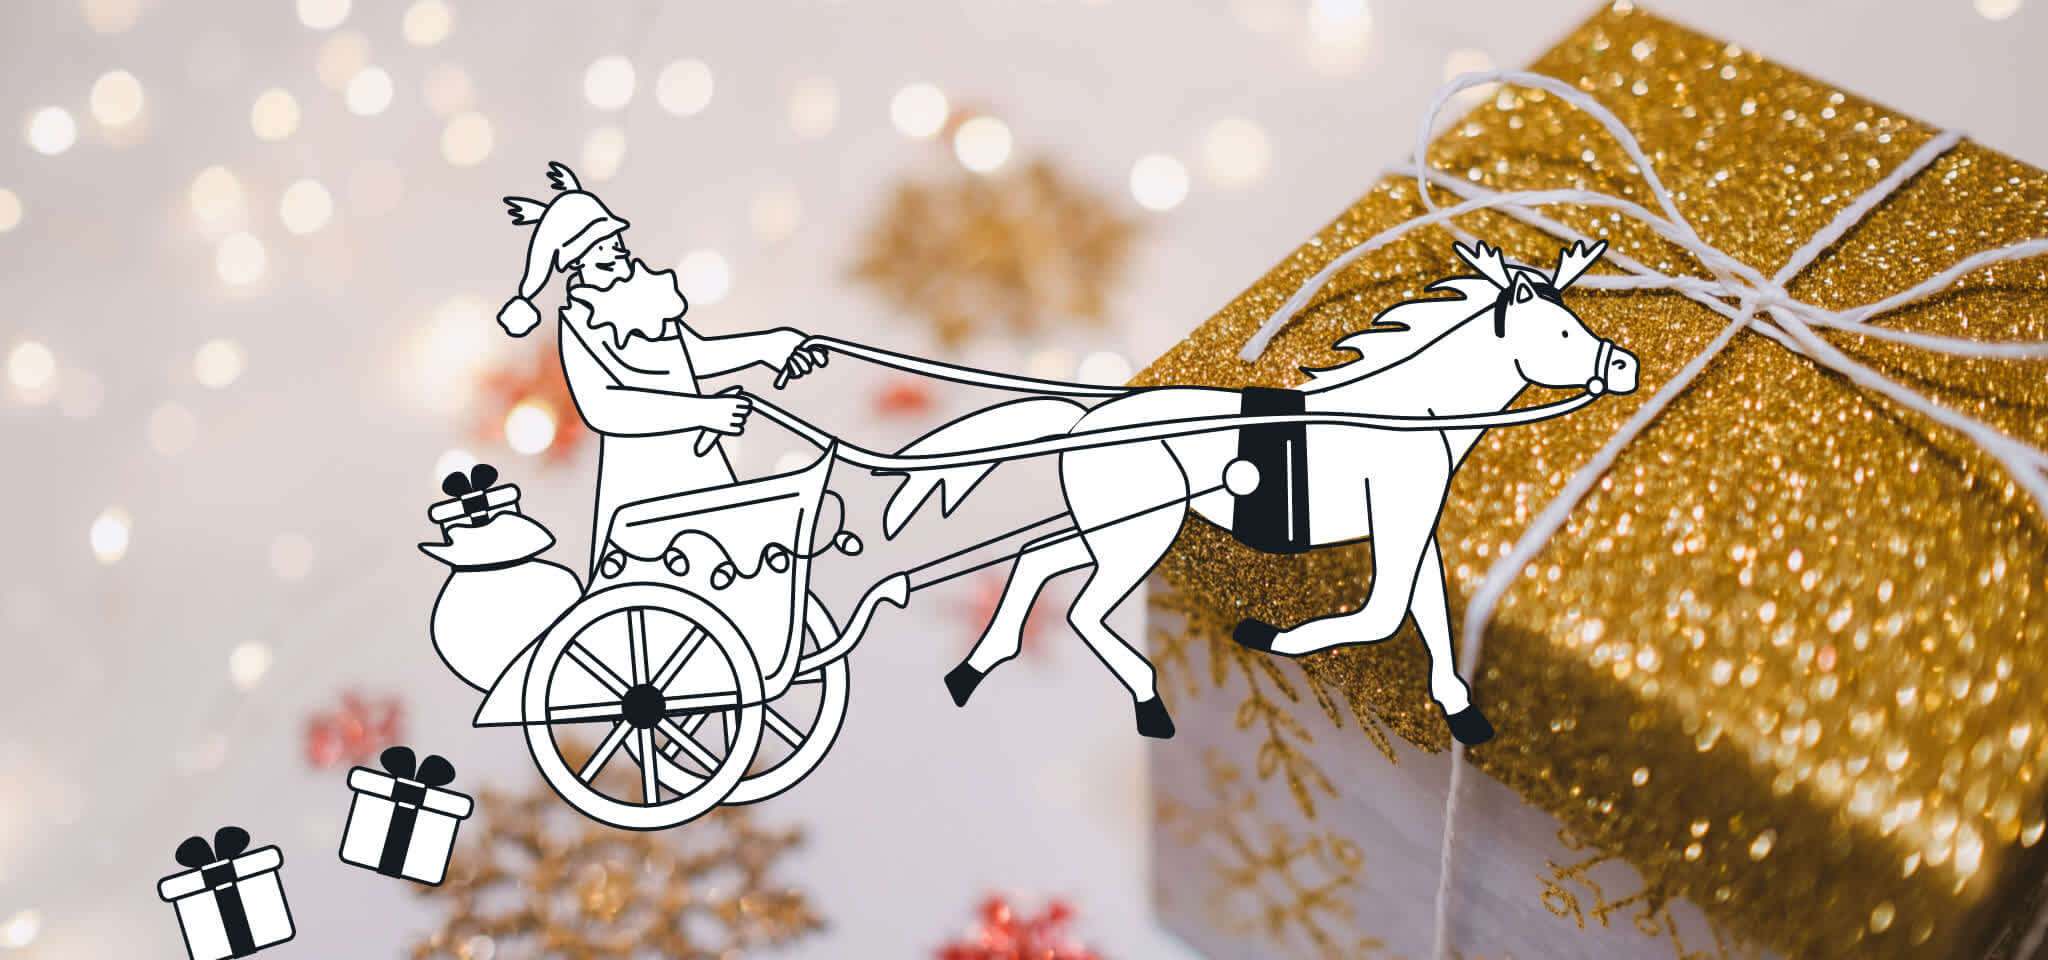 Hermes riding the sleigh